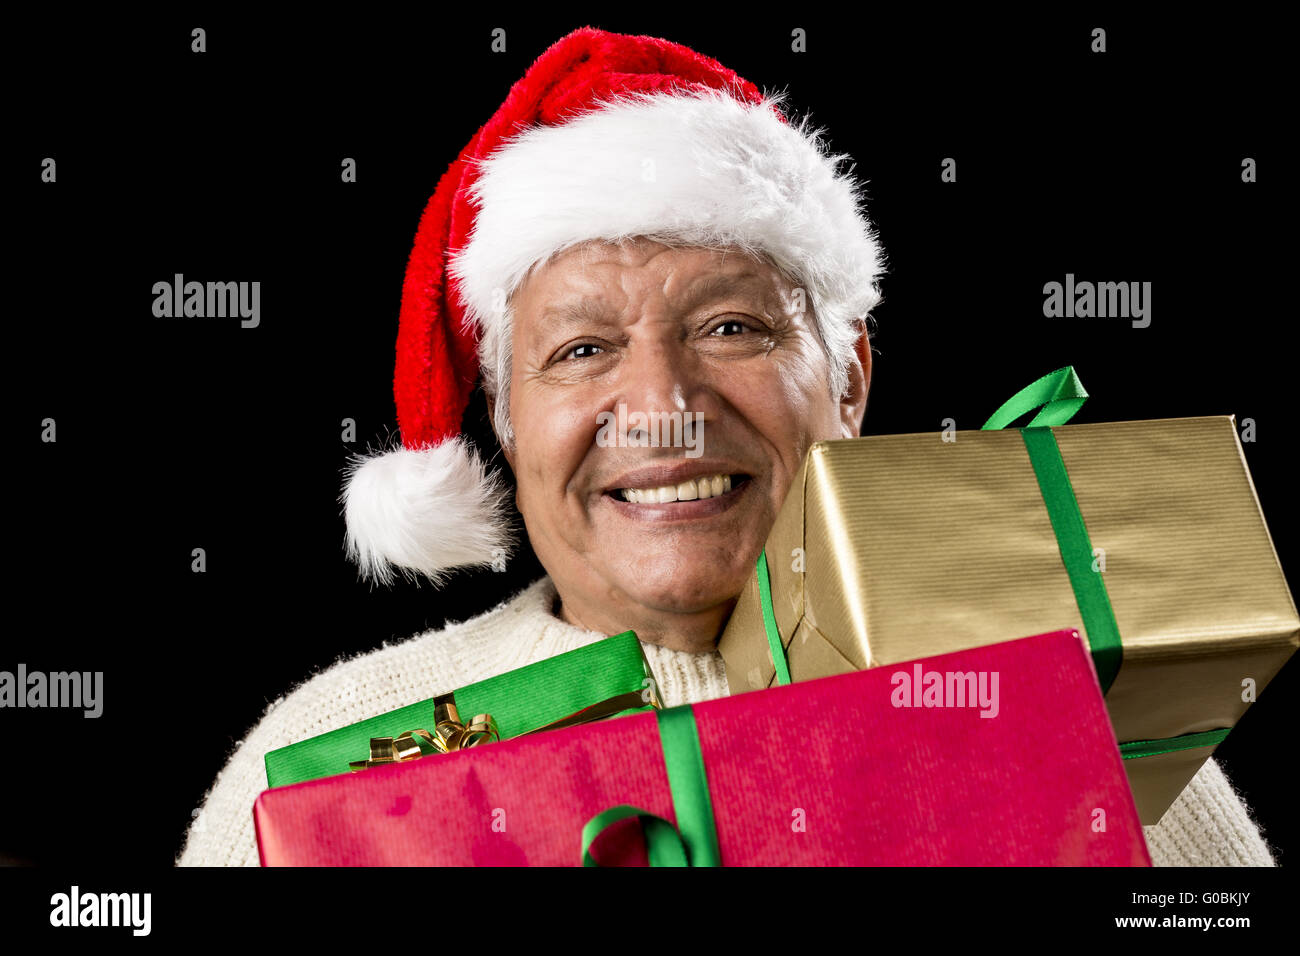 Jolly Old Man With Santa Cap And Three Xmas Gifts Stock Photo